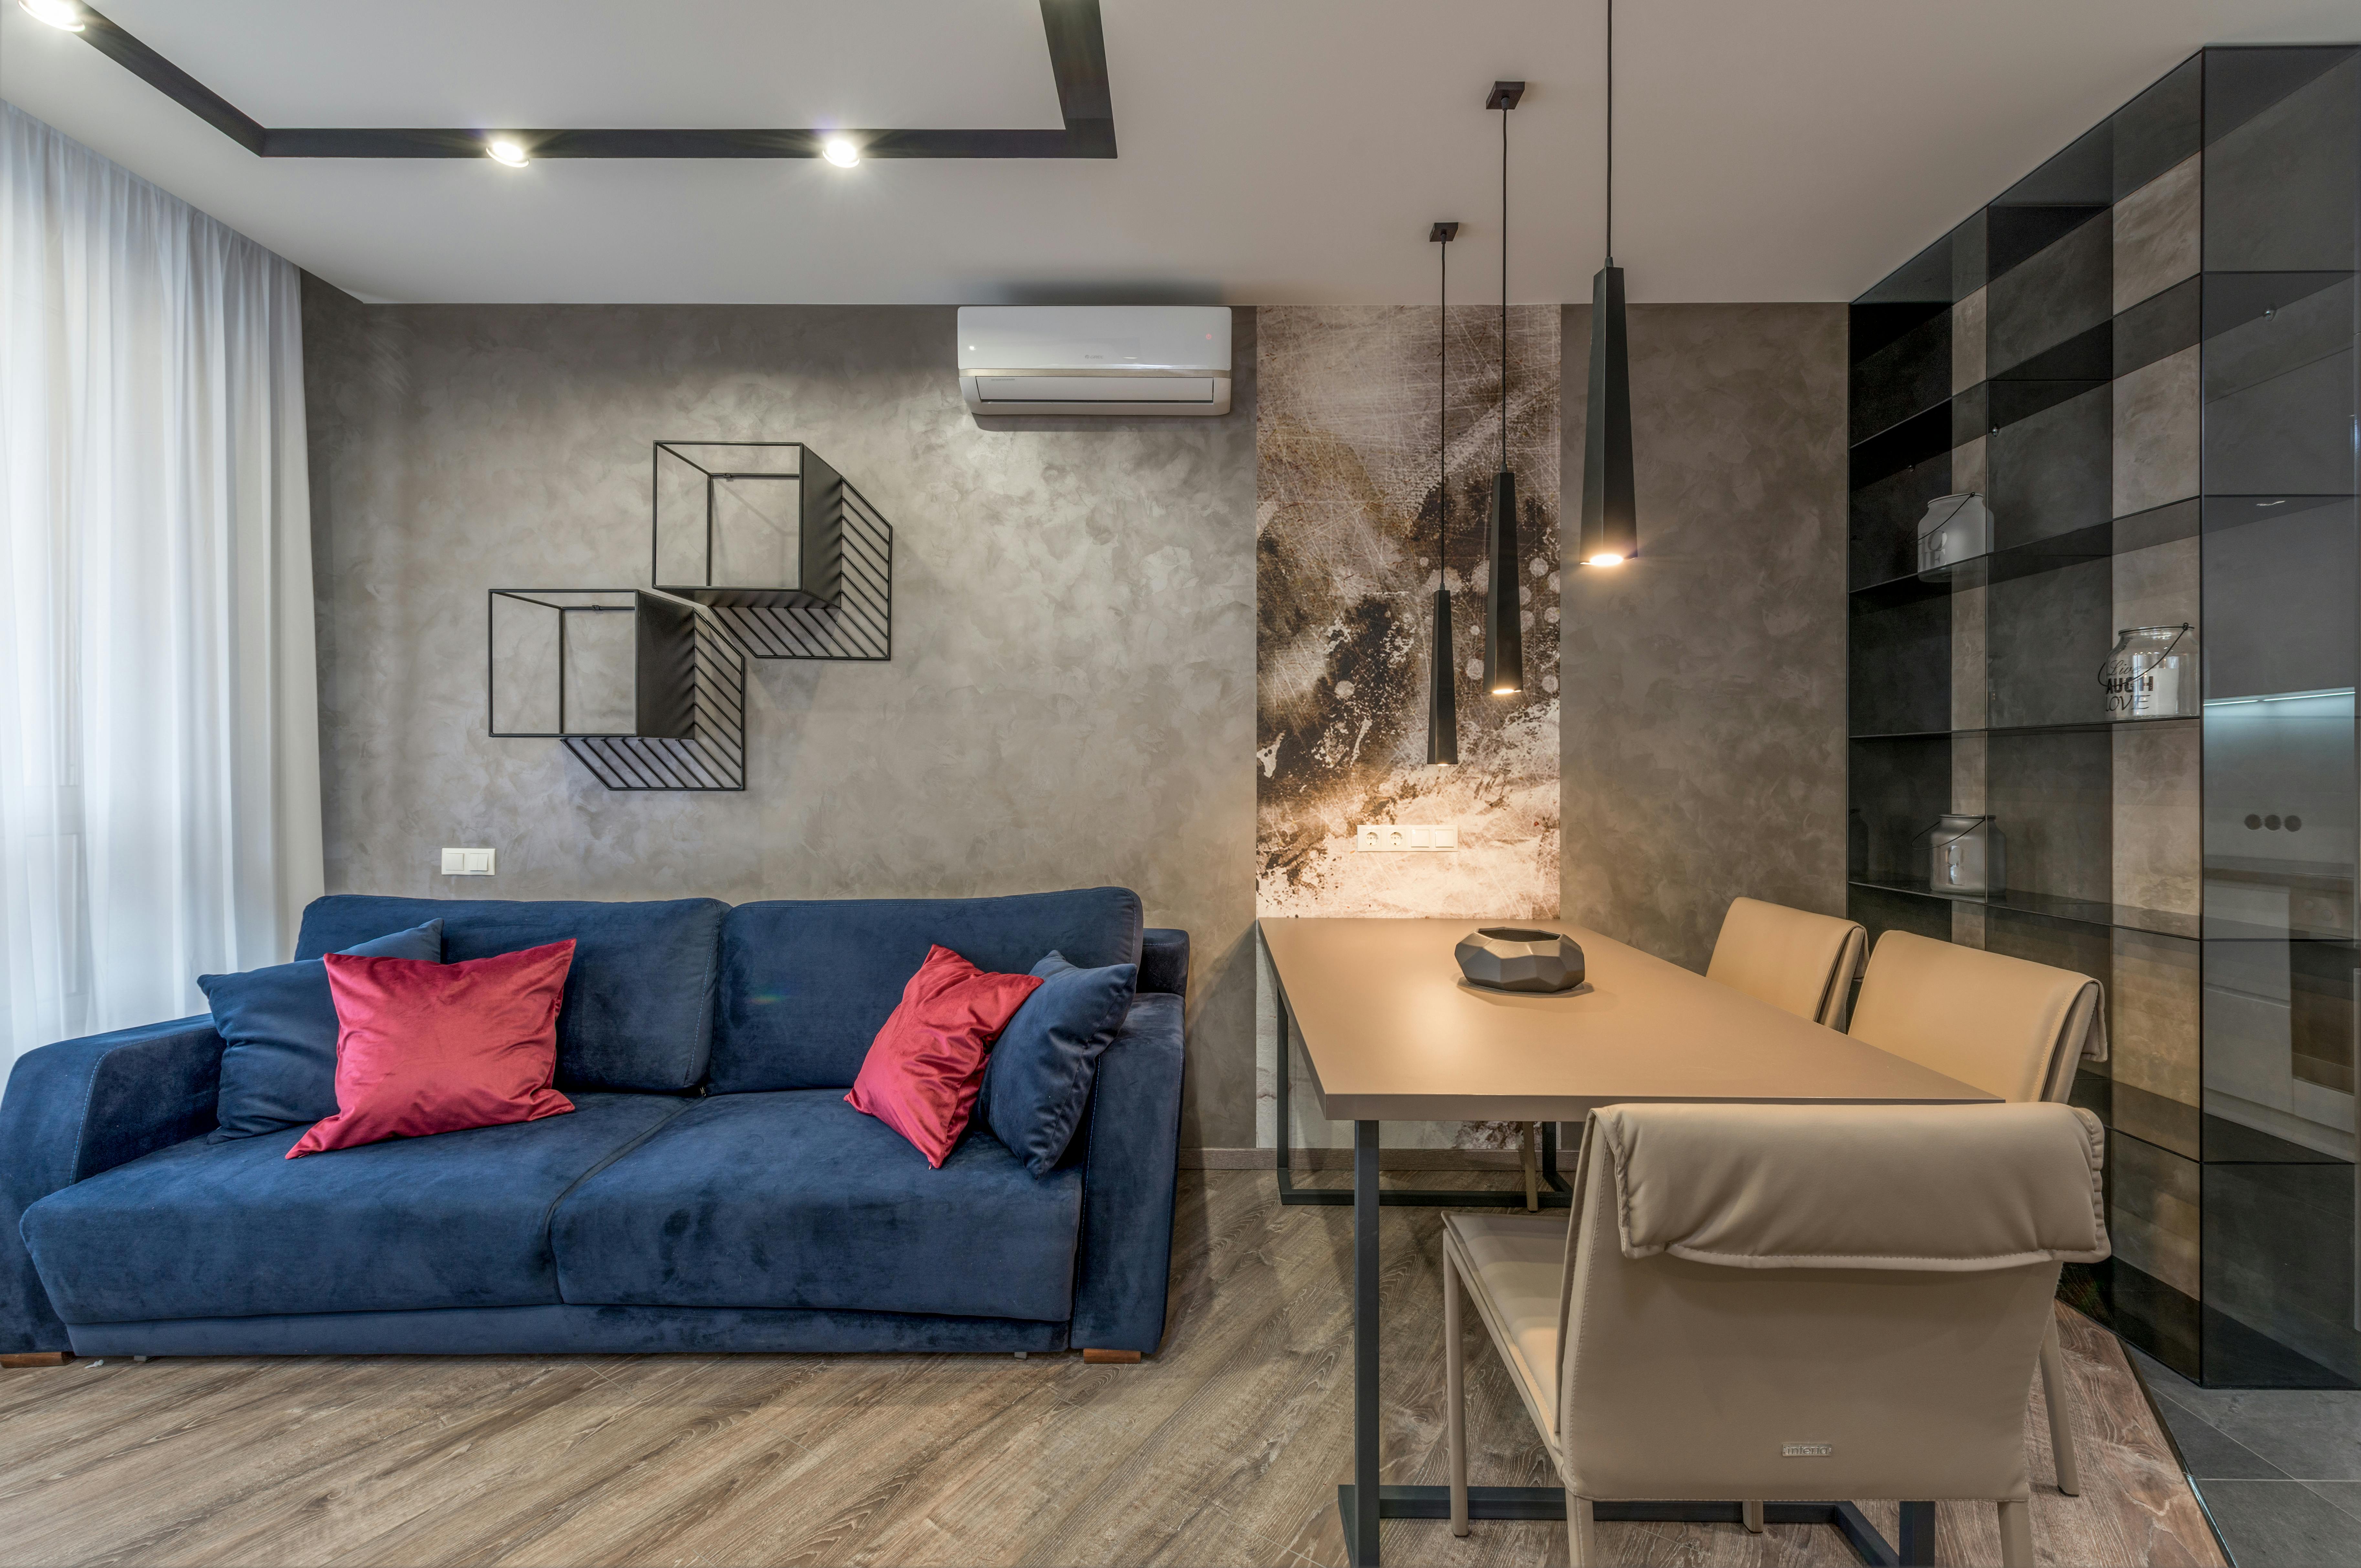 Garage Living Room Design Photos and Ideas - Dwell